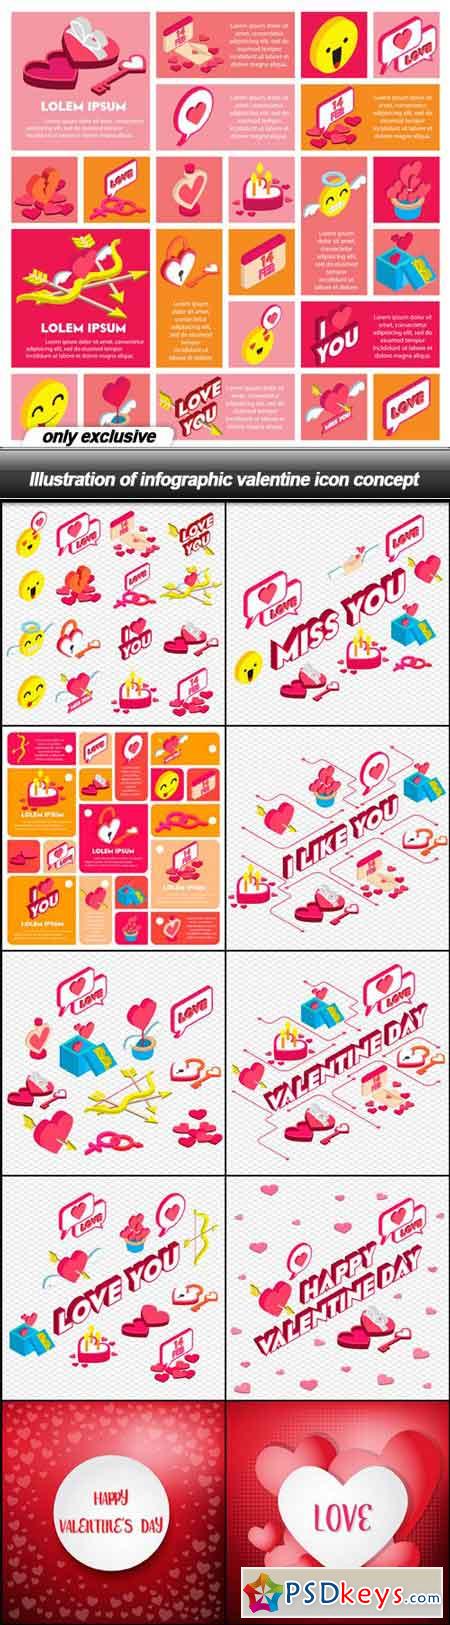 Illustration of infographic valentine icon concept - 11 EPS